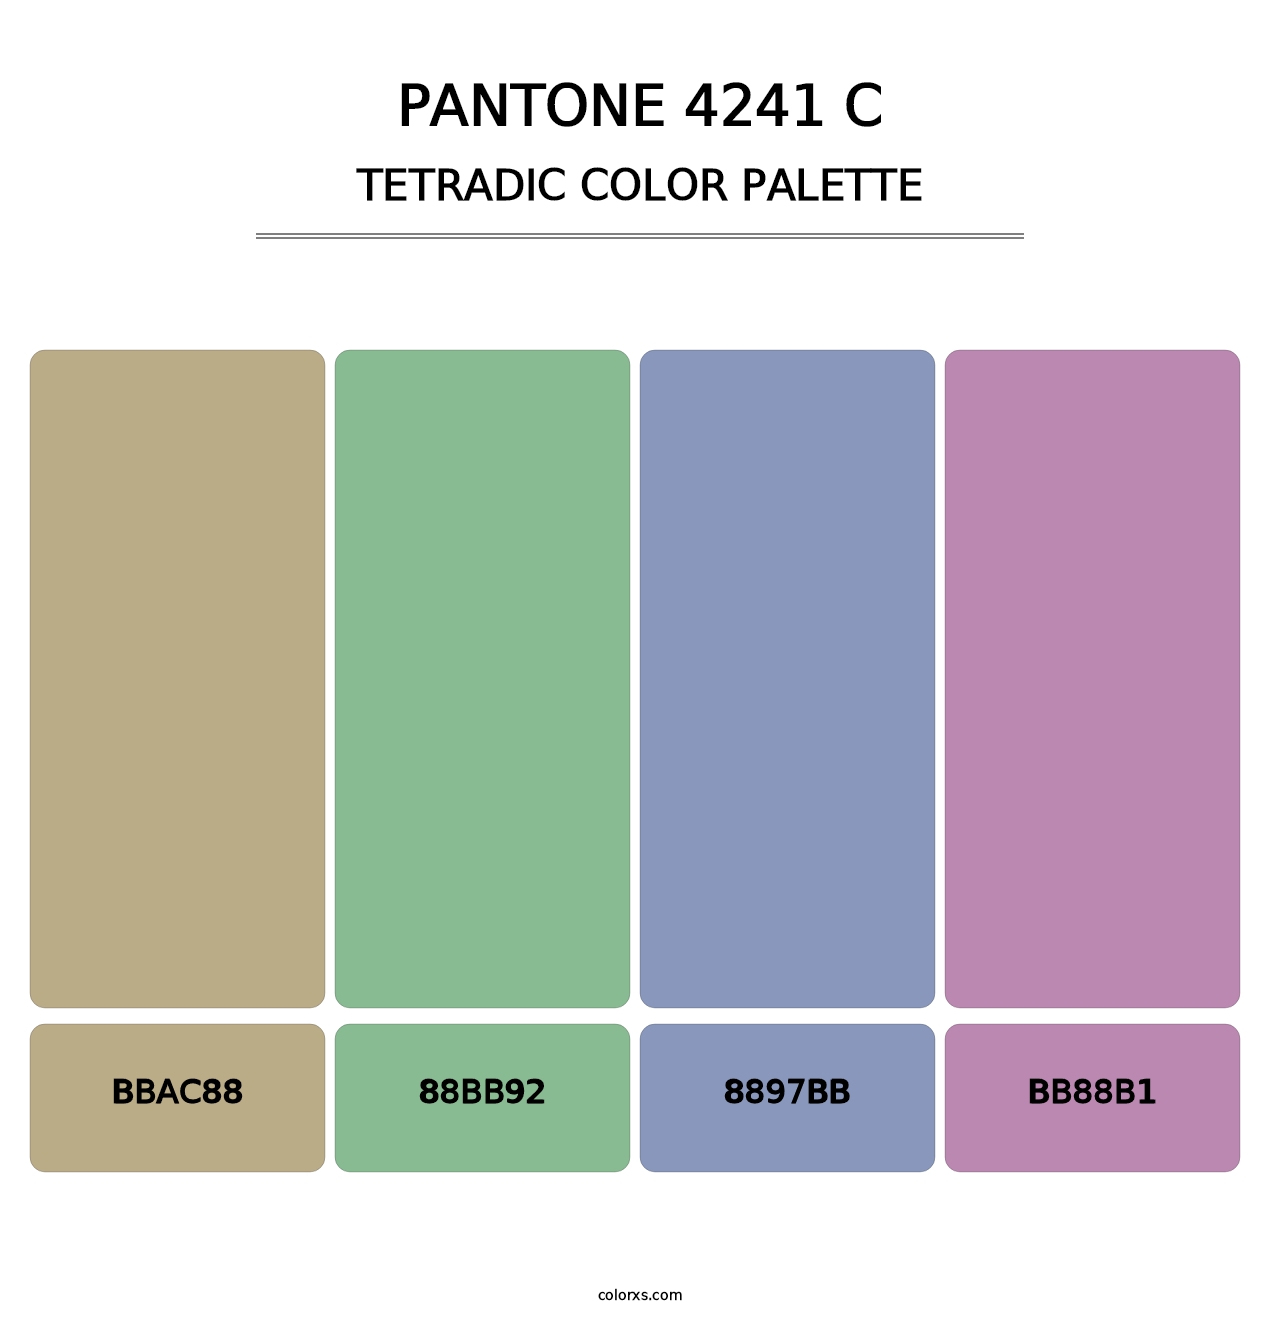 PANTONE 4241 C - Tetradic Color Palette